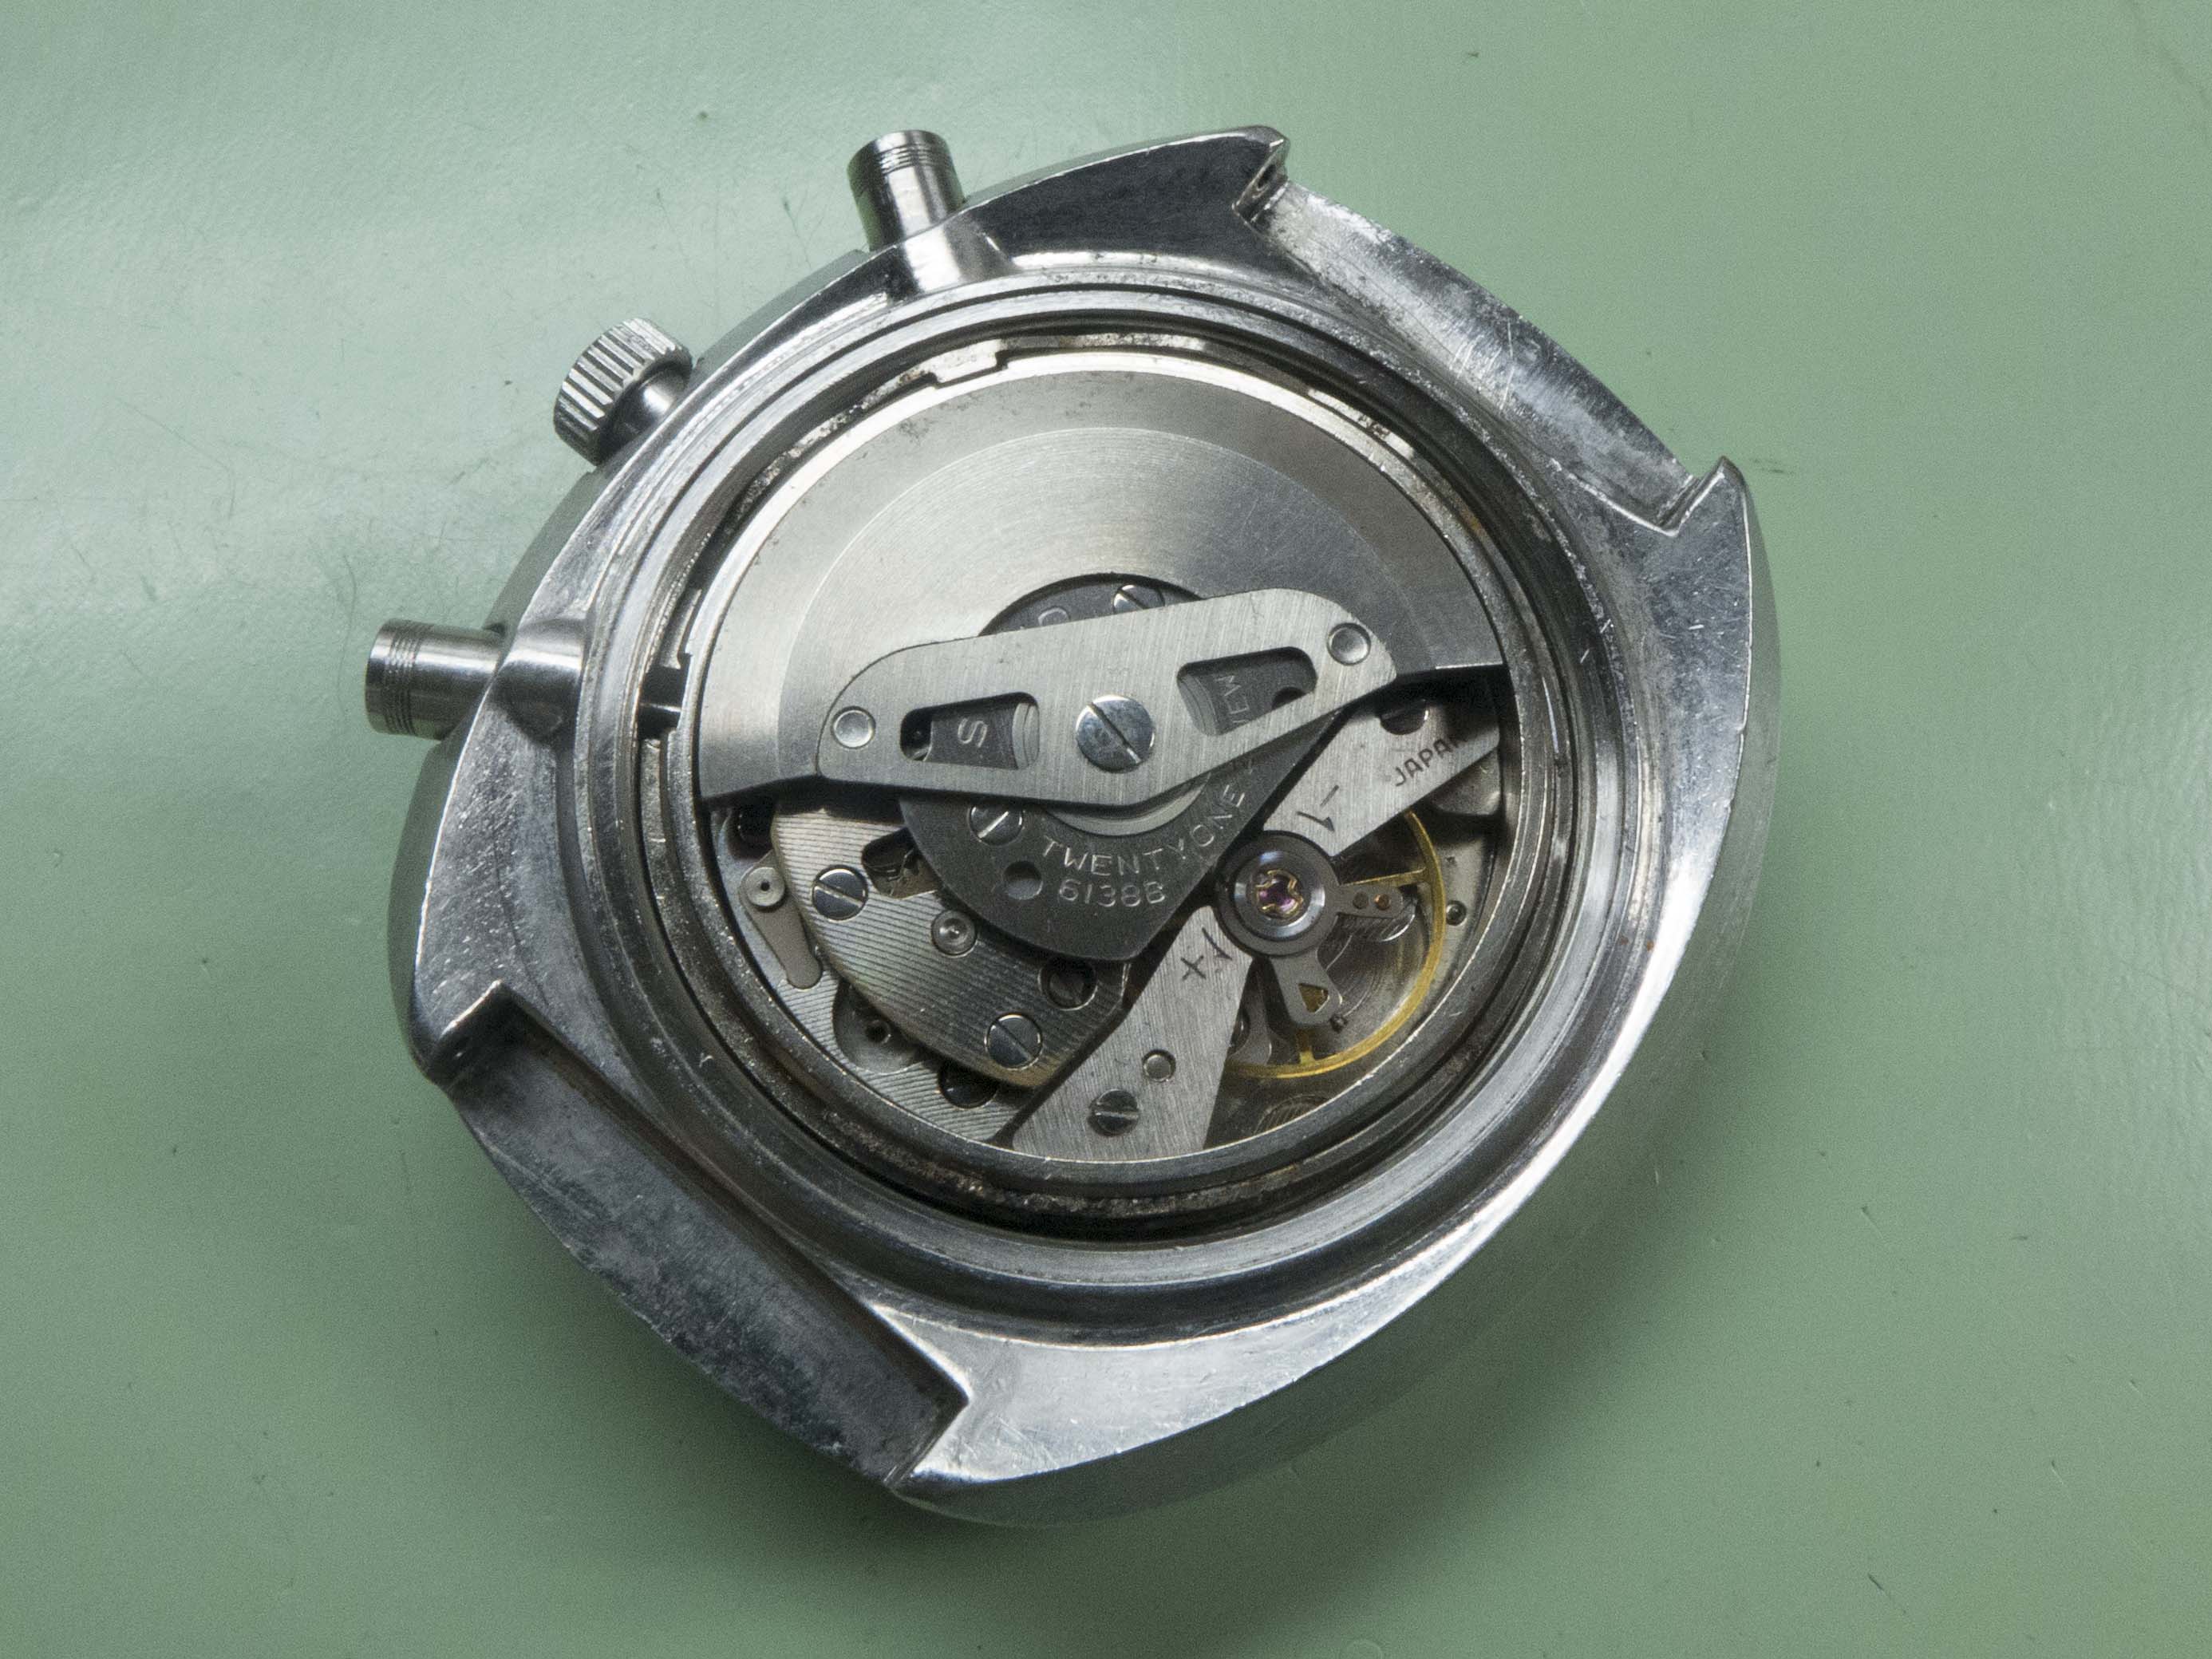 Seiko 6138-0011 Chronograph | The Watch Bloke